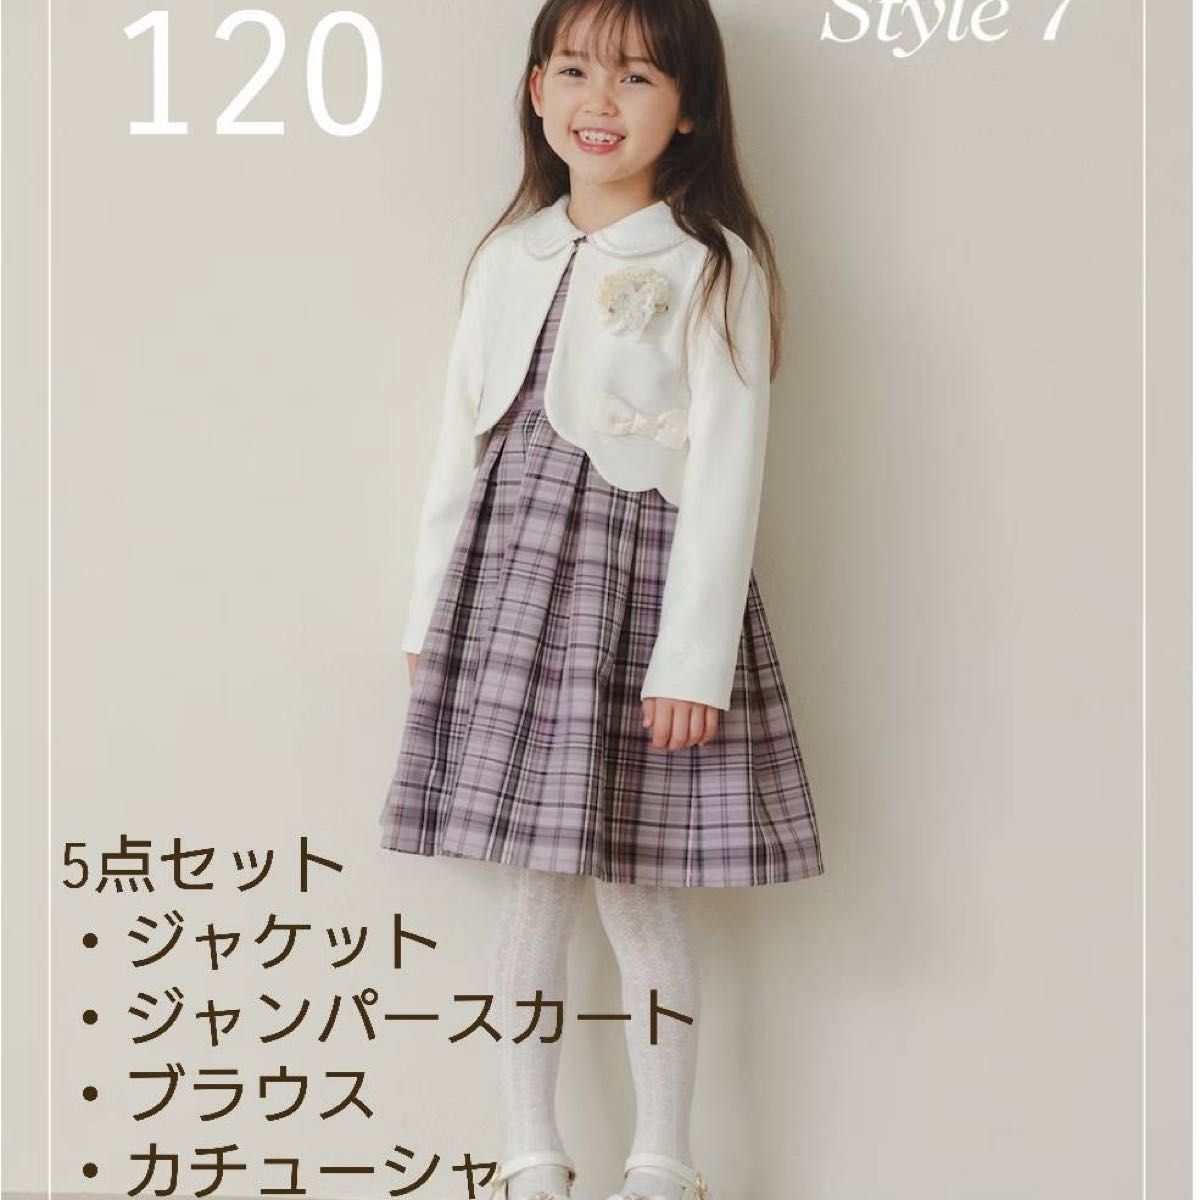 【anyFAM】卒園式 入学式 セレモニー 5点セット 120 女の子